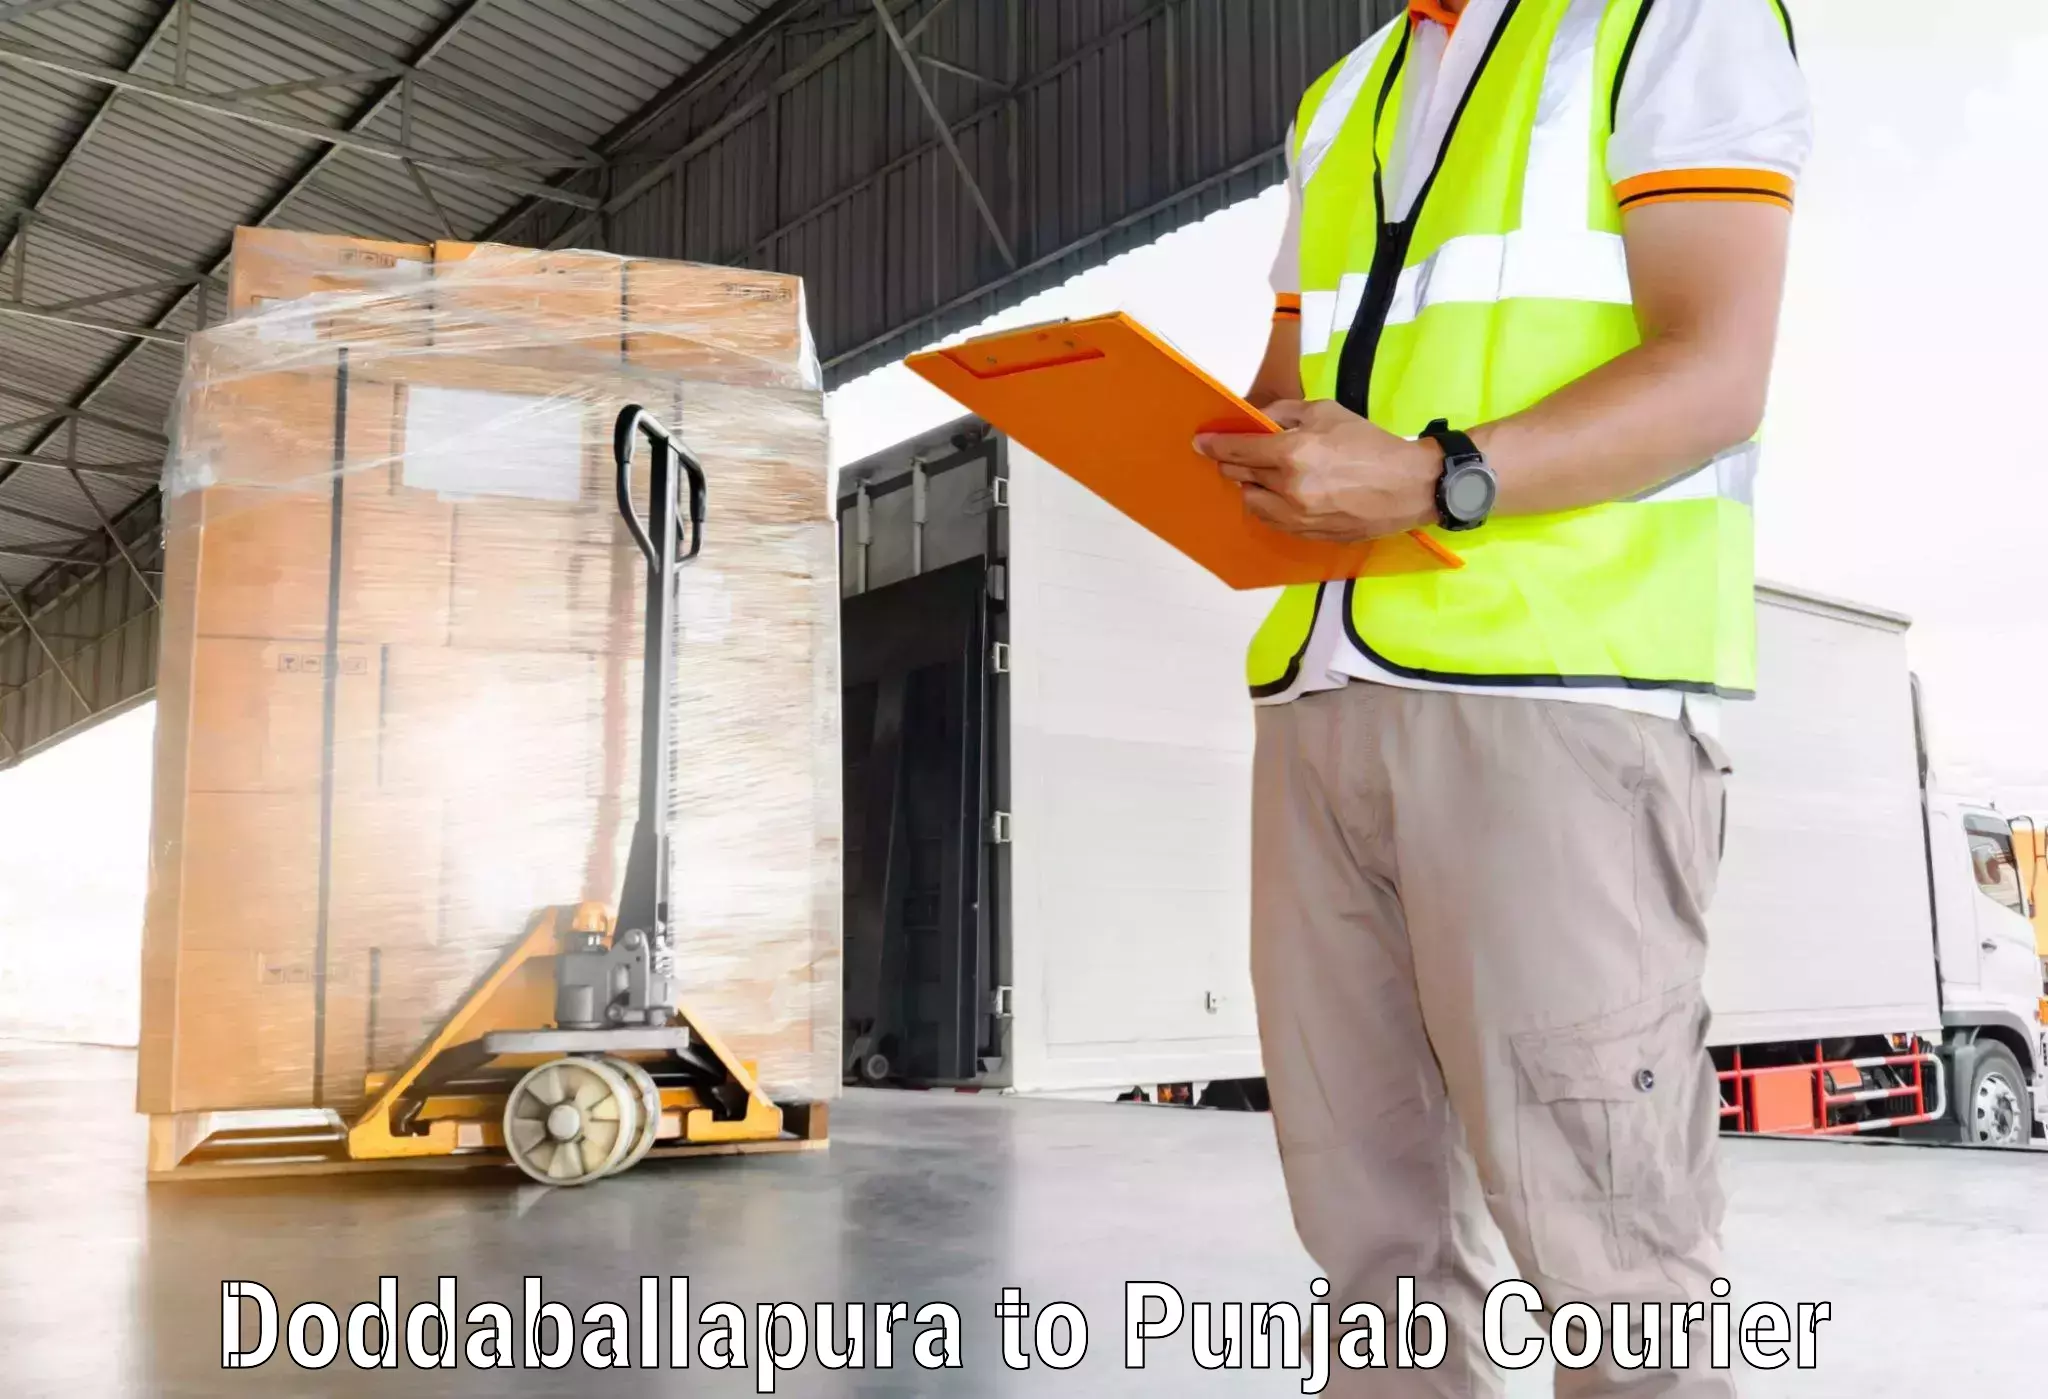 Next-day delivery options Doddaballapura to Jalandhar